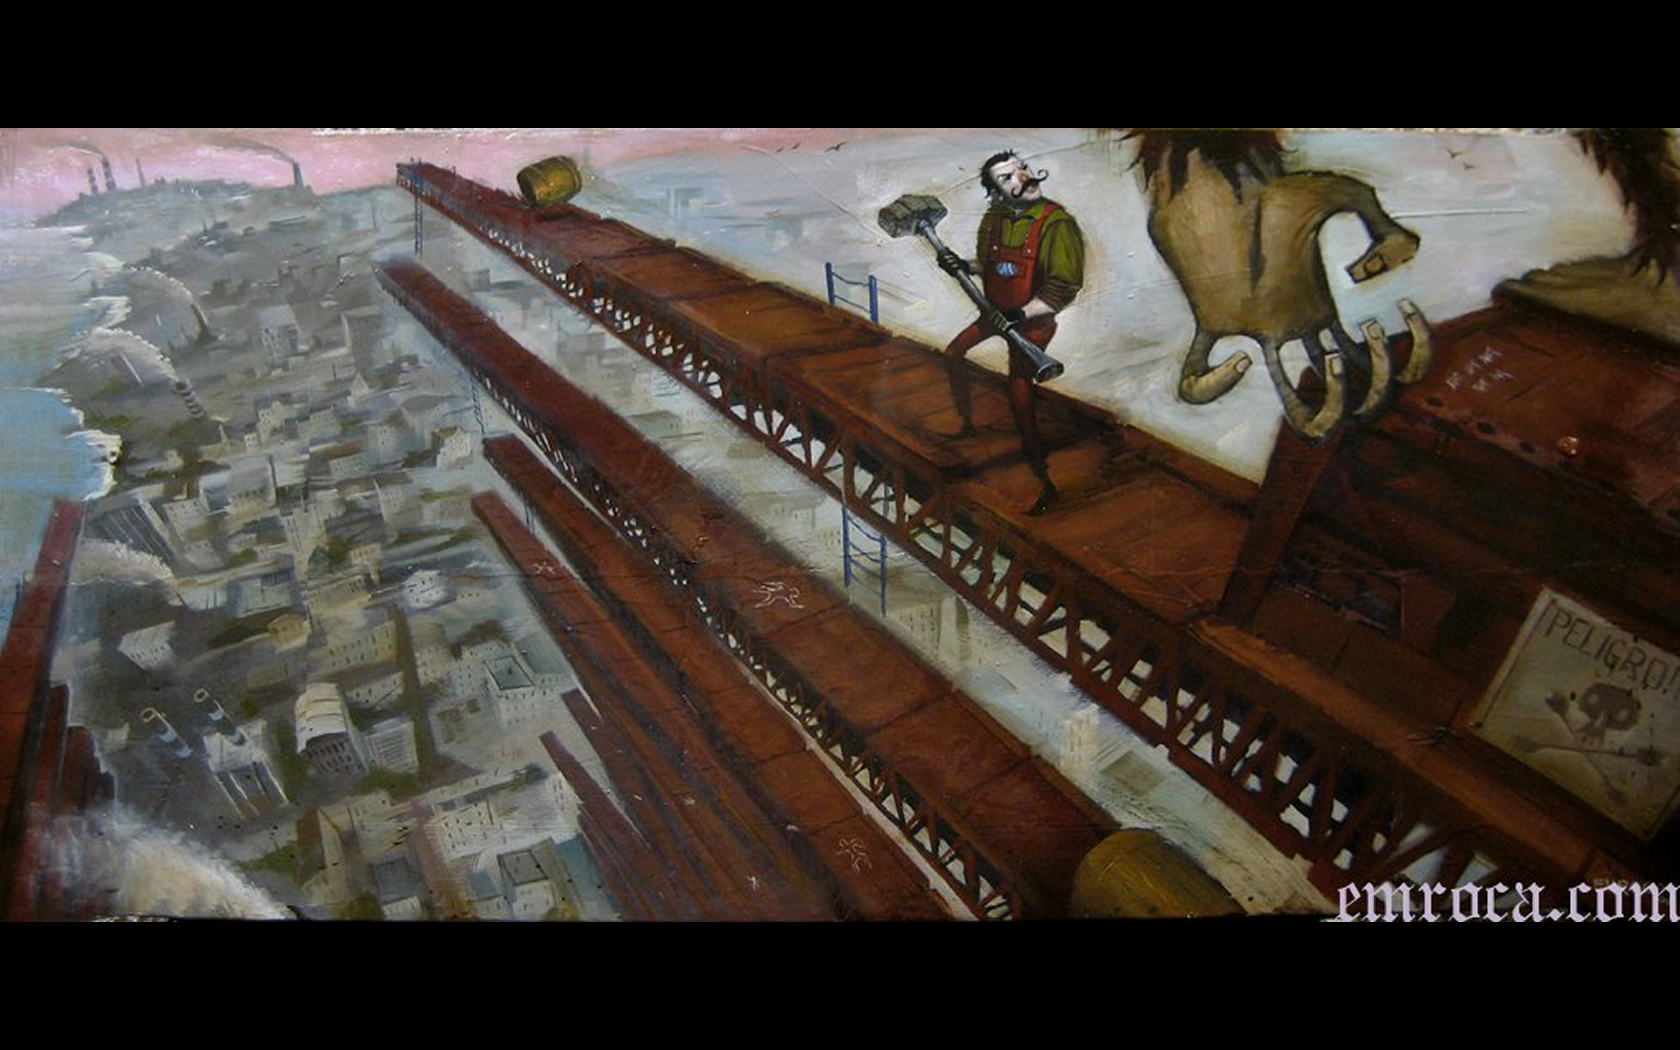 Video Game Donkey Kong Wallpaper